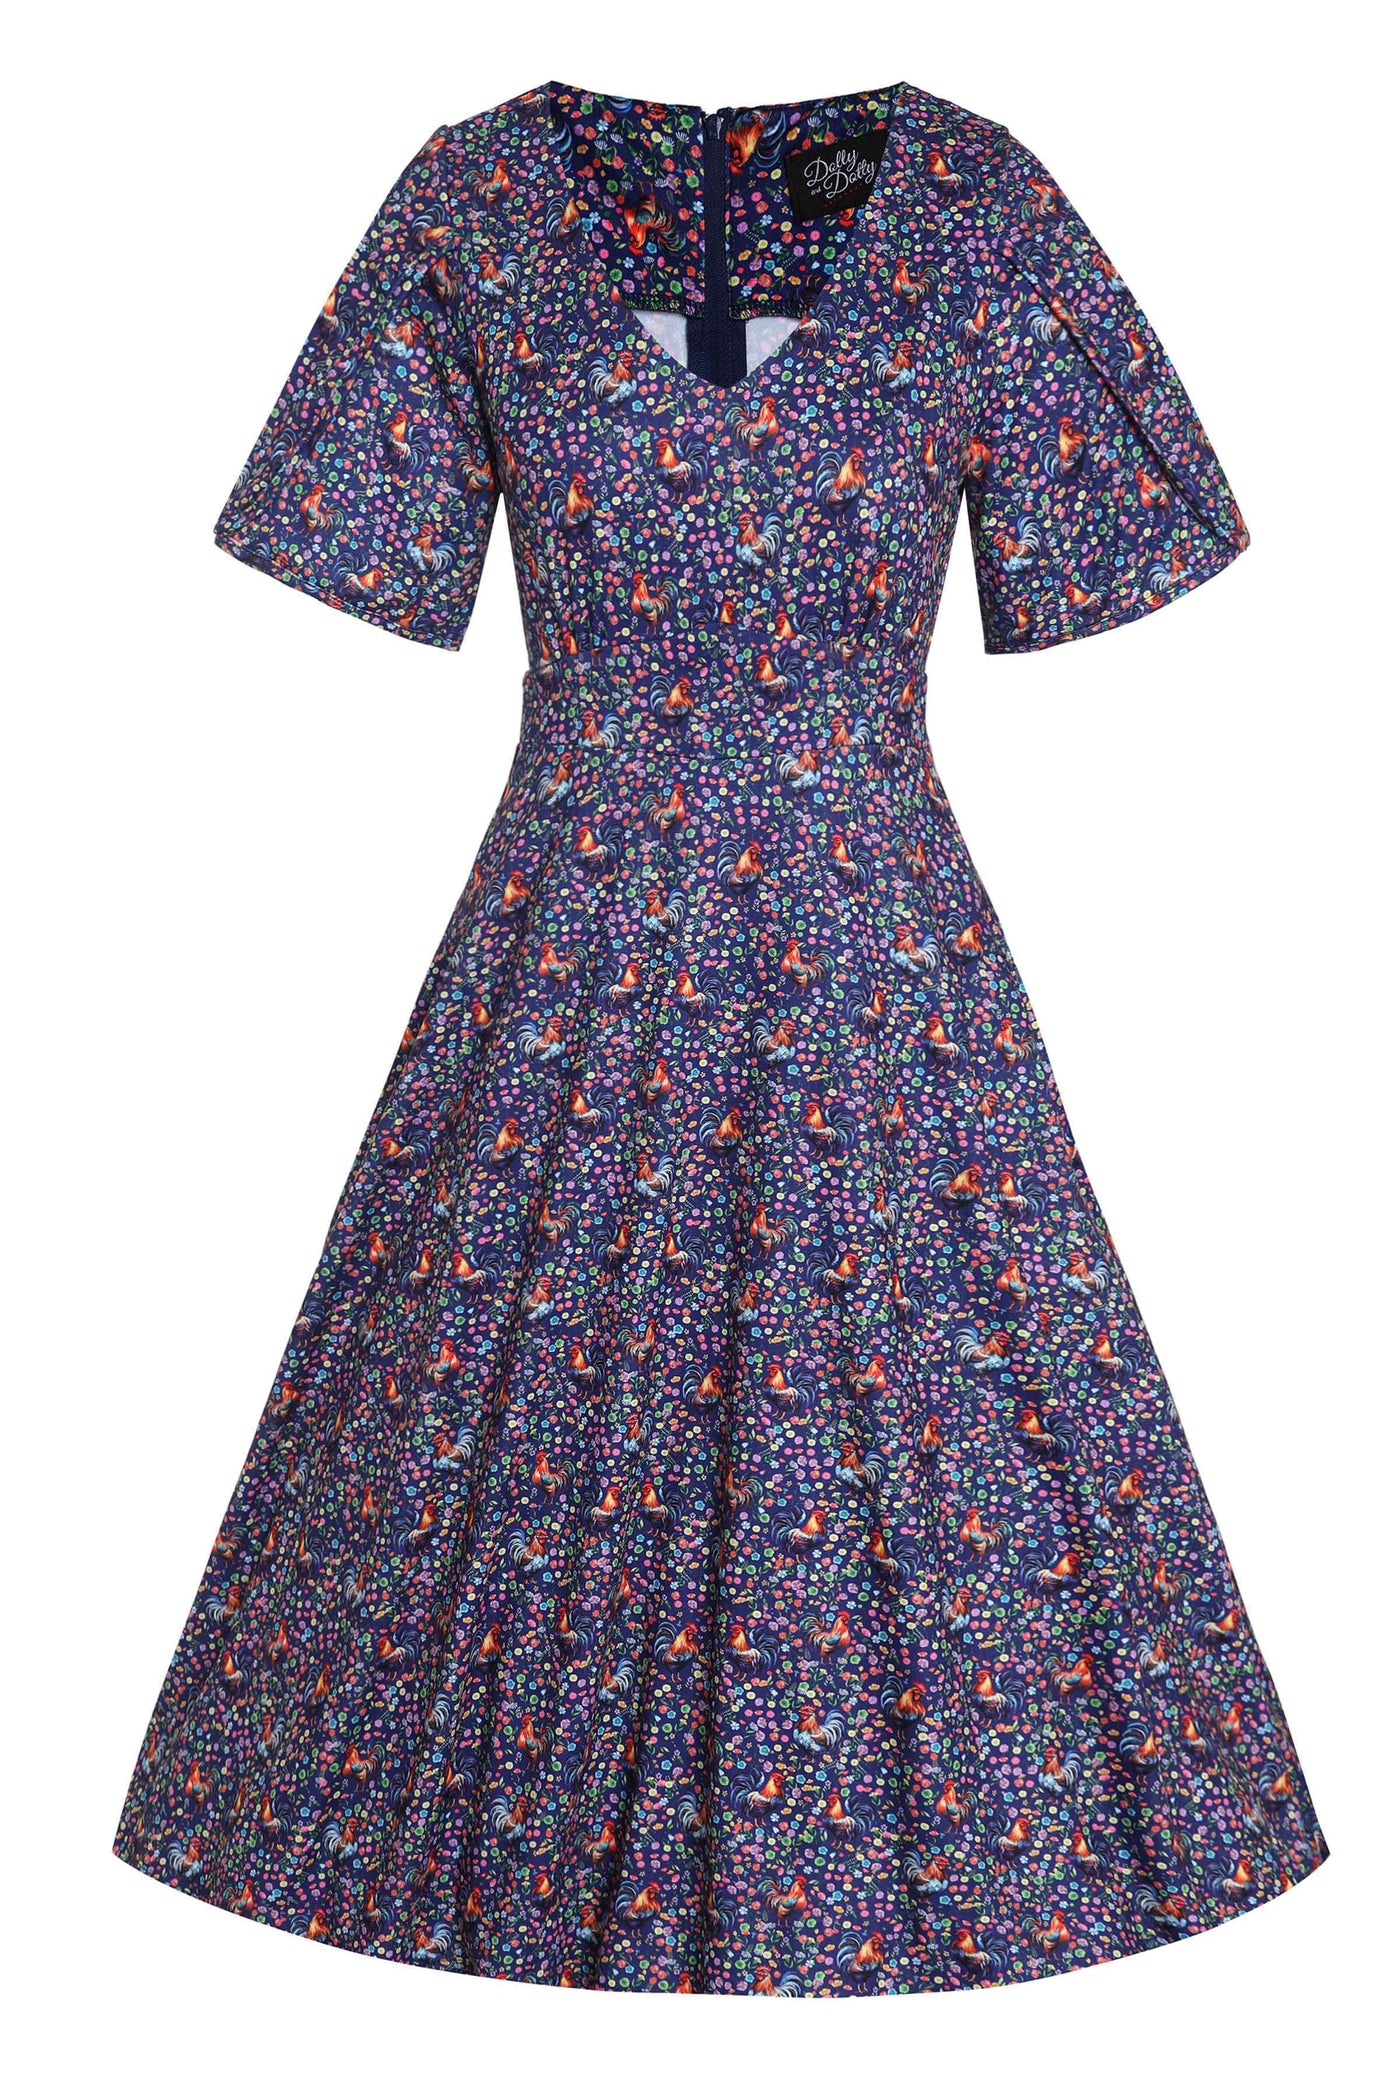 Janice Purple Sleeved Tea Dress in Rooster Floral Print